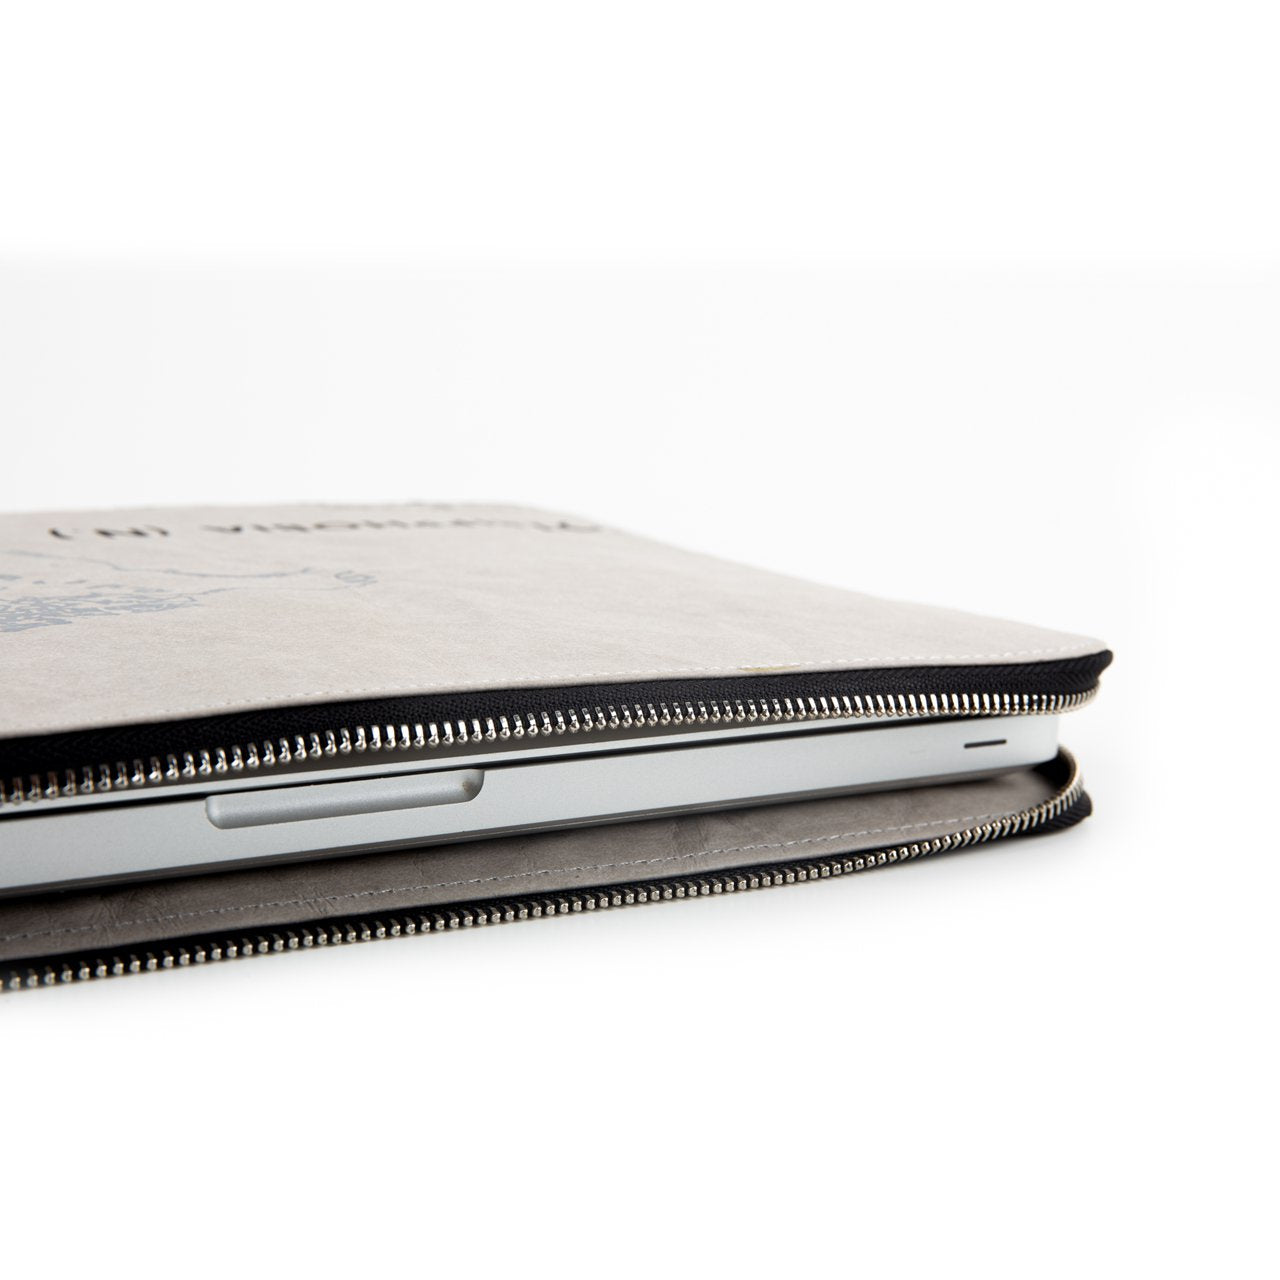 Laptop Sleeve: No Trip Phobia (Grey) - 7mm - Fine Paper Stationery